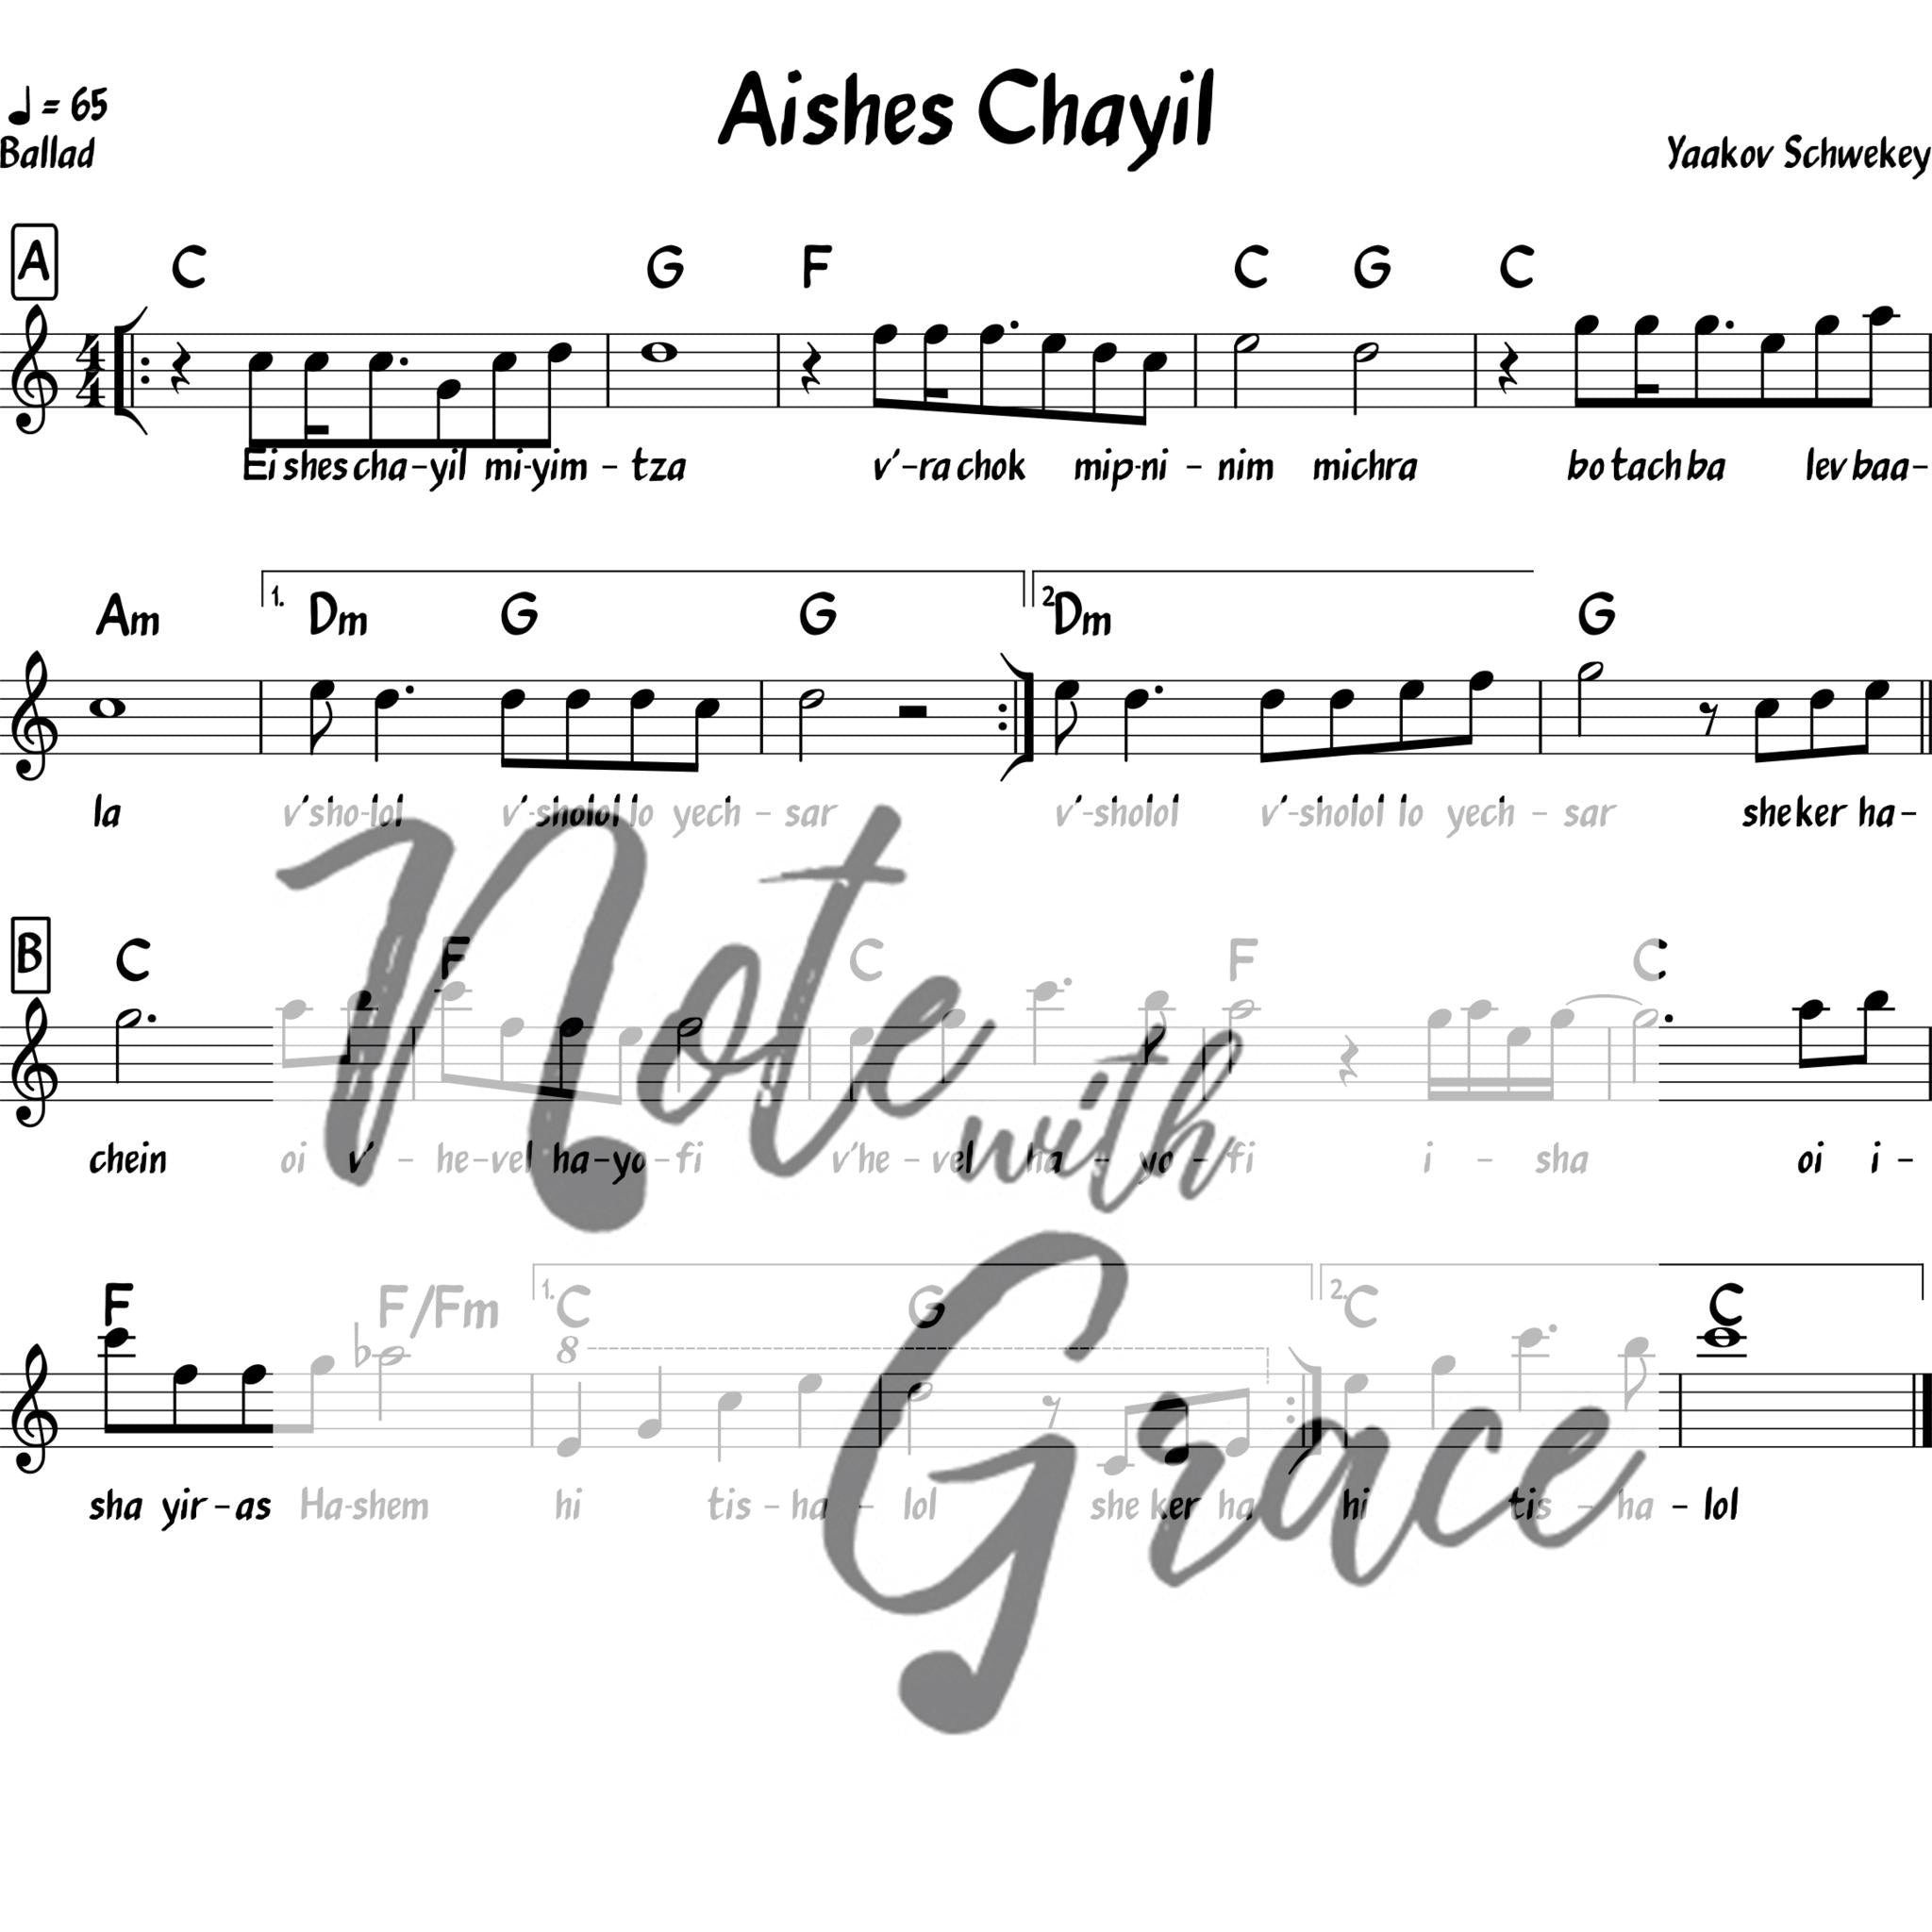 Aishes Chayil Lead Sheet (Yaakov Schwekey)-Sheet music-NoteWithGrace.com